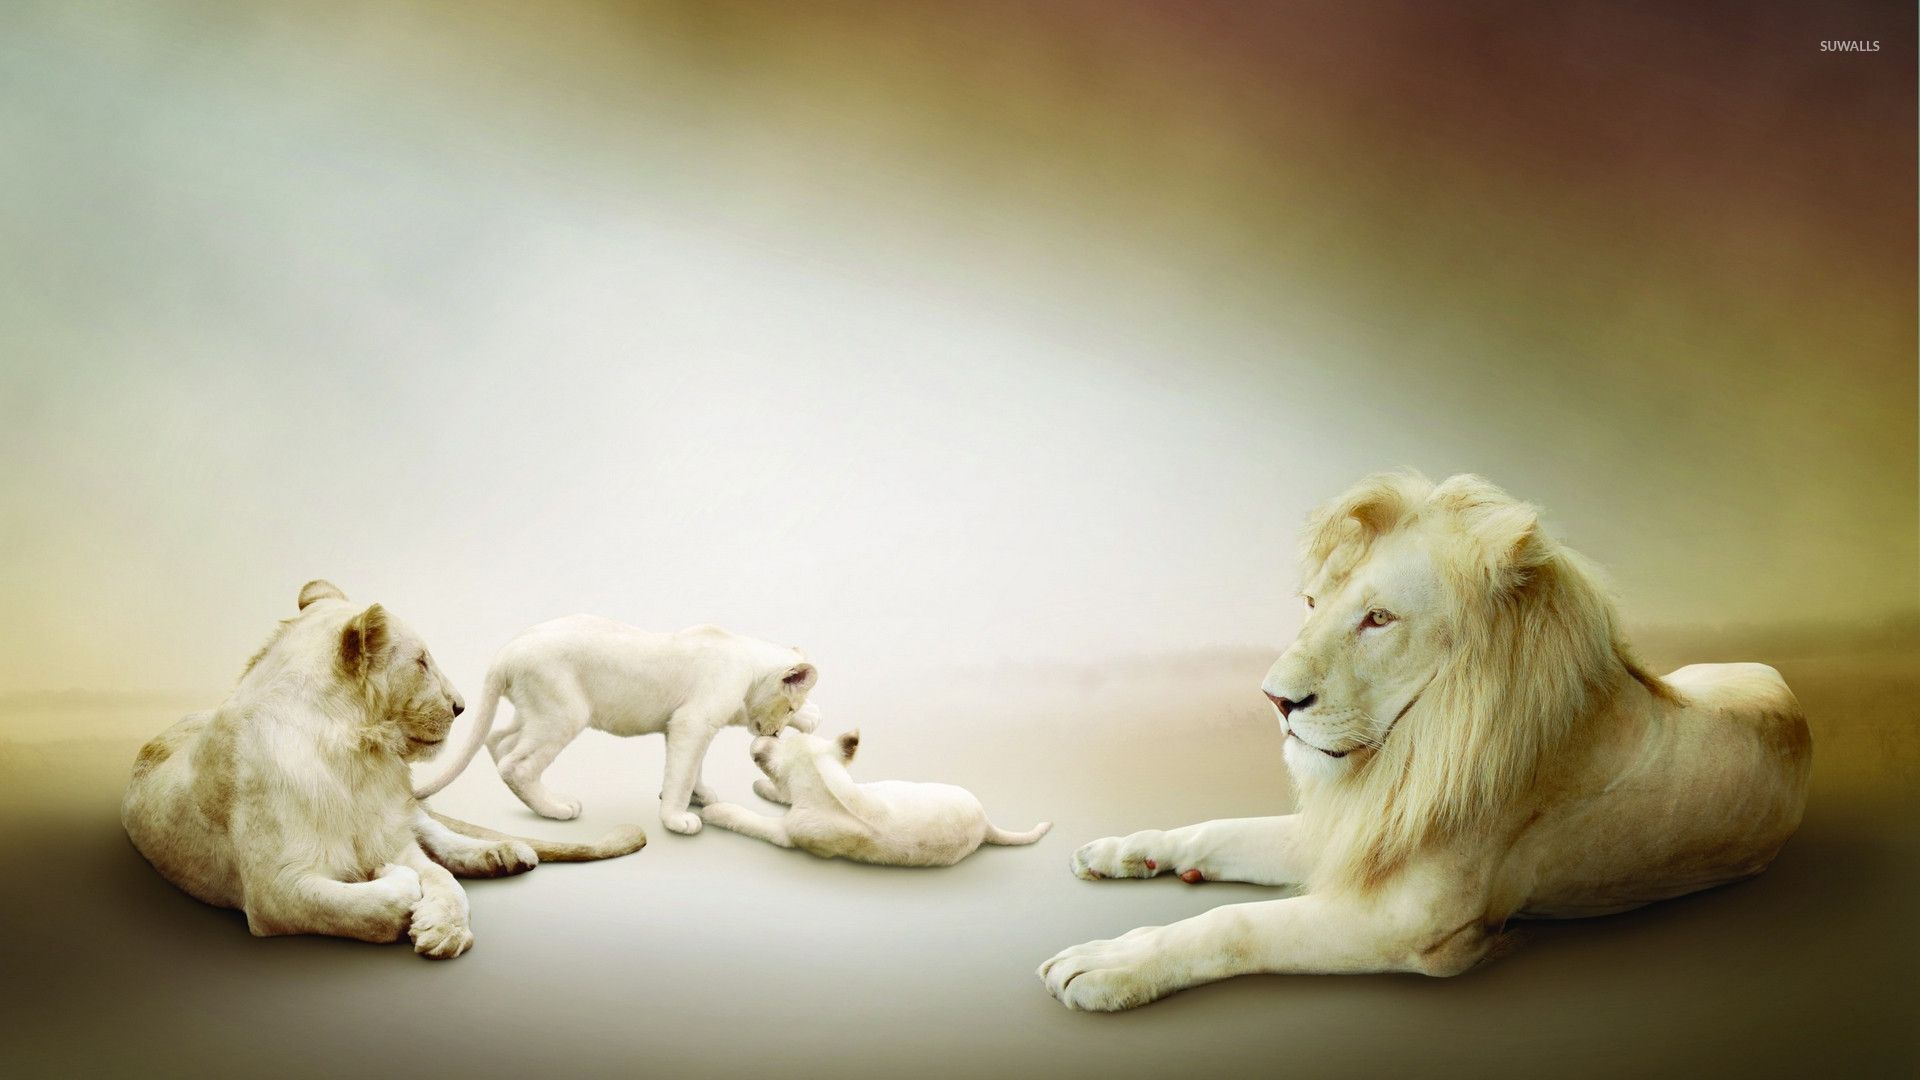 Albino lion family wallpaper - Animal wallpapers - #26756